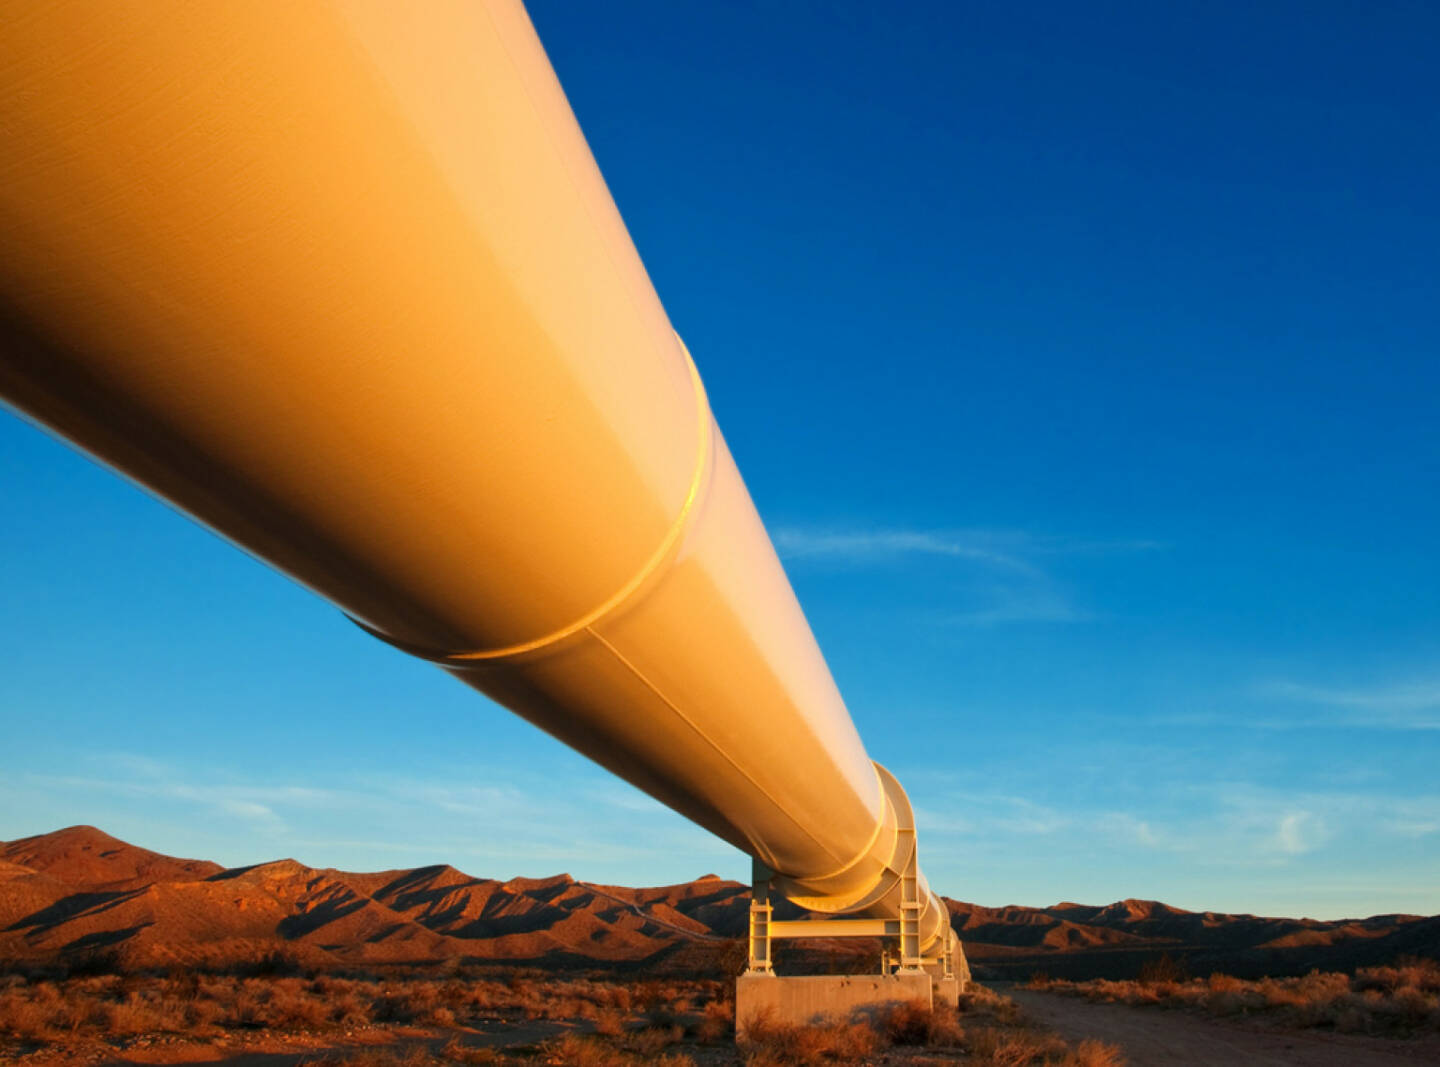 Pipeline, Erdöl, Erdgas, Ölindustrie, http://www.shutterstock.com/de/pic-69514060/stock-photo-beautiful-sunrise-light-on-a-pipeline-in-the-mojave-desert-california.html? 